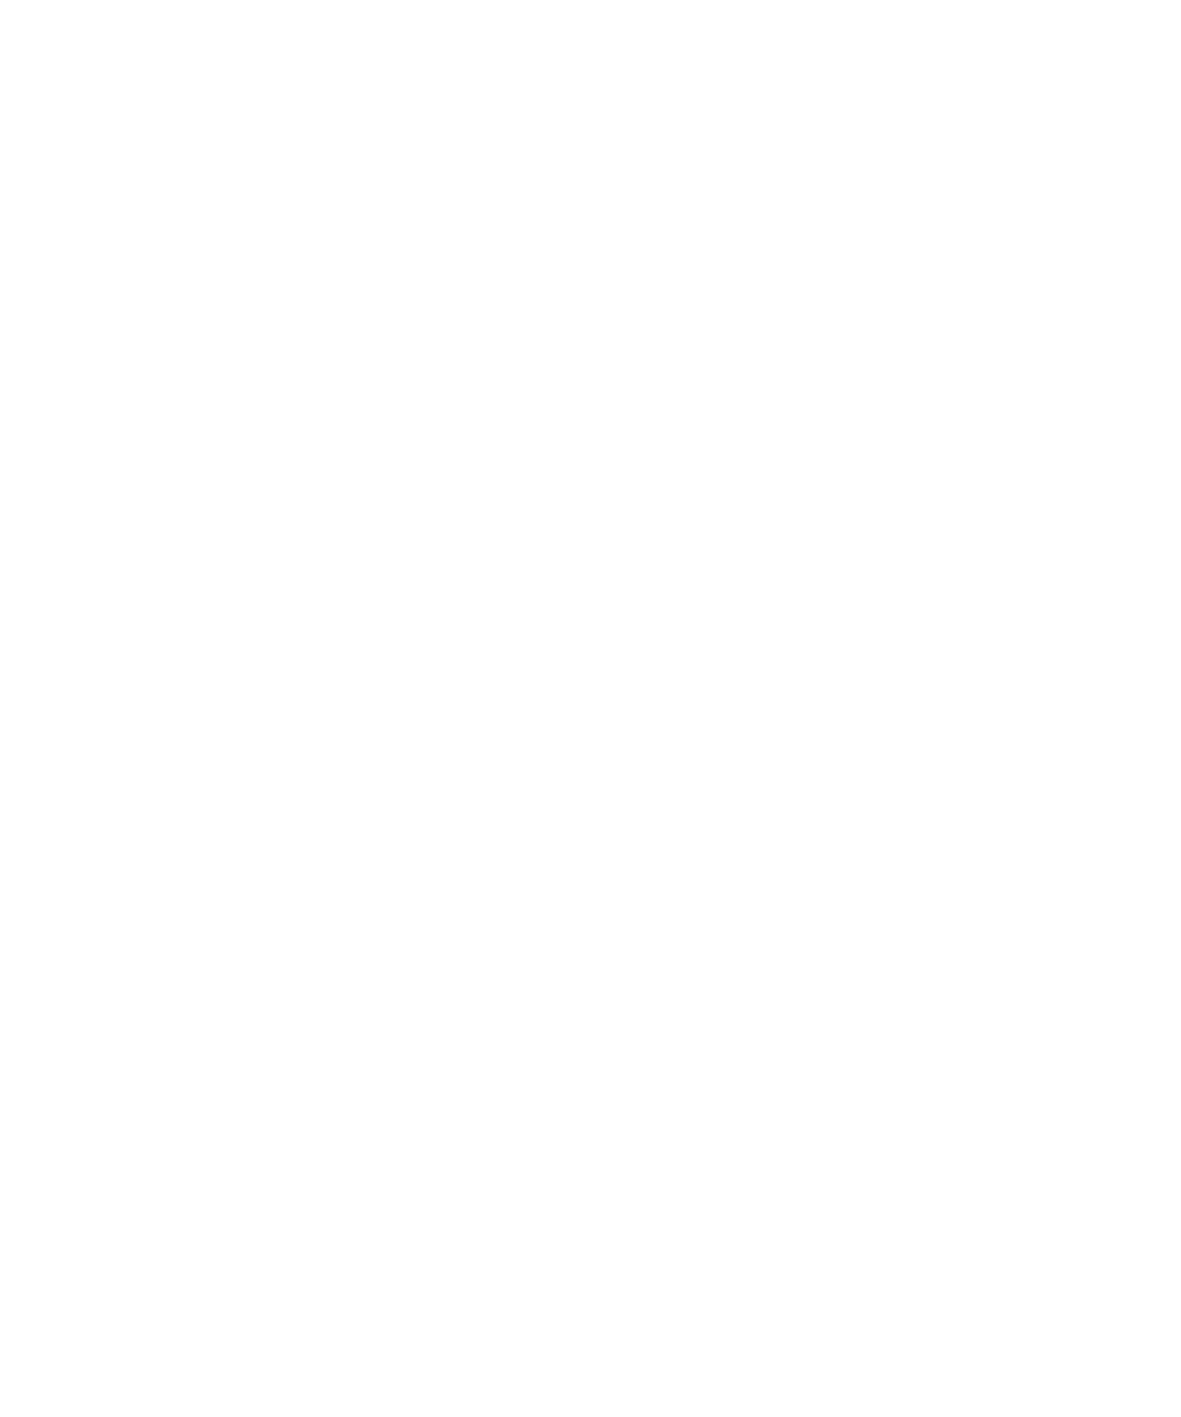 Pension Transfer Gold Standard Logo